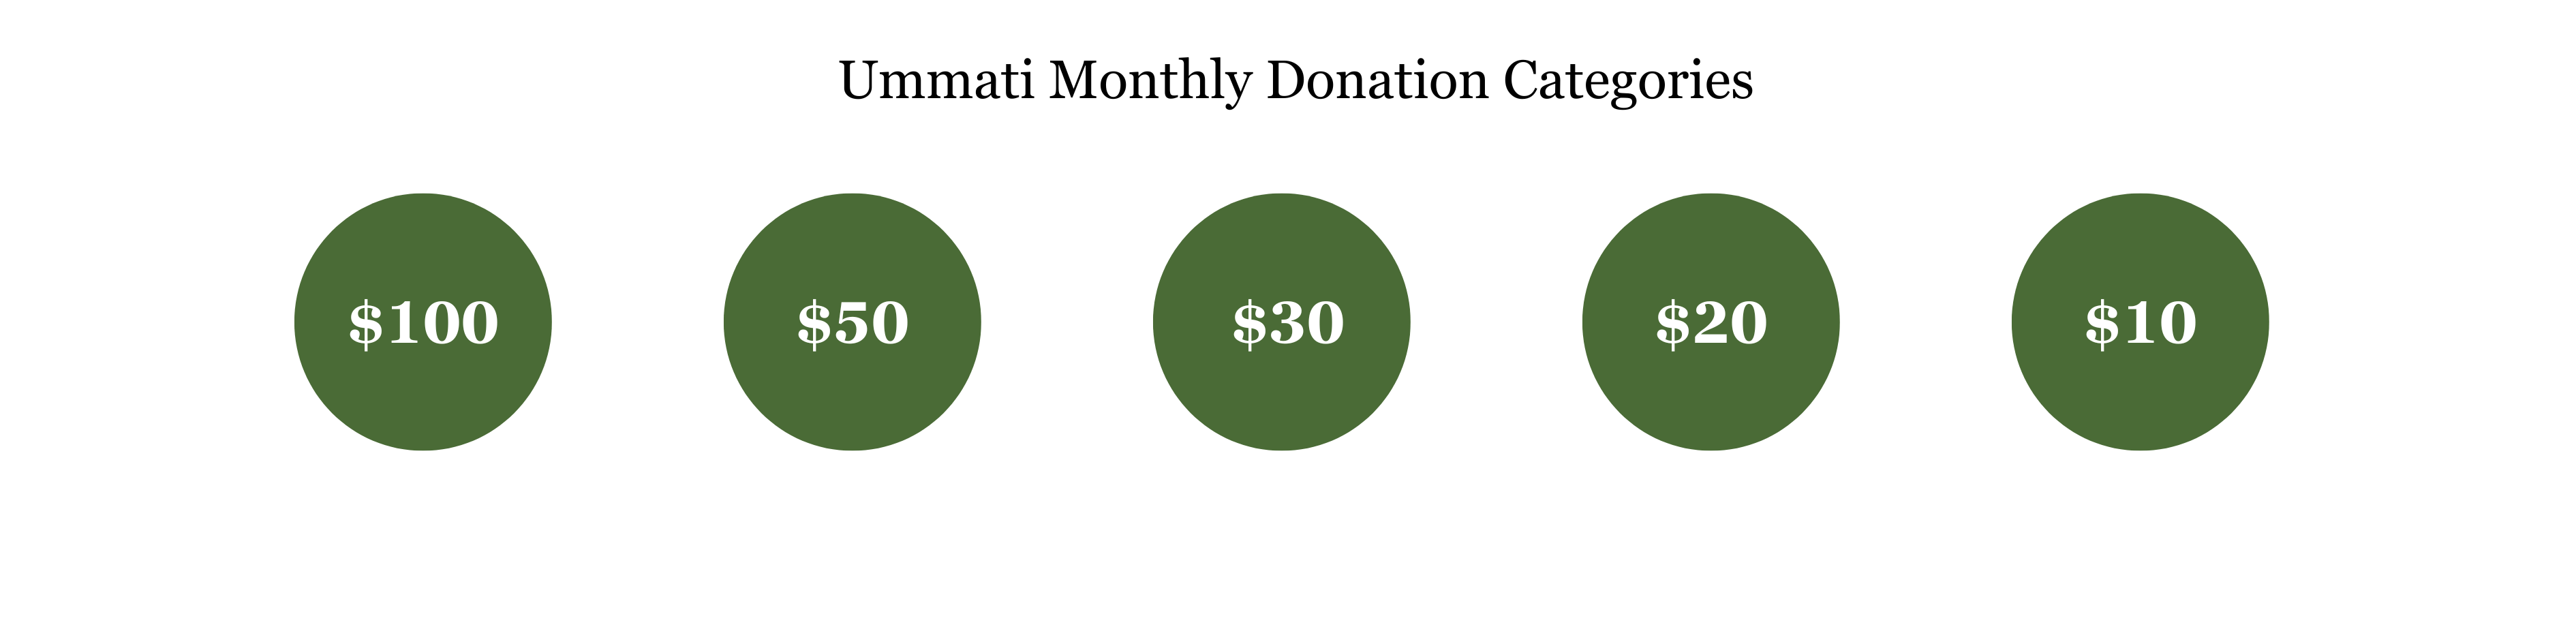 Ummati donations $100 $50 $30 $20 $10